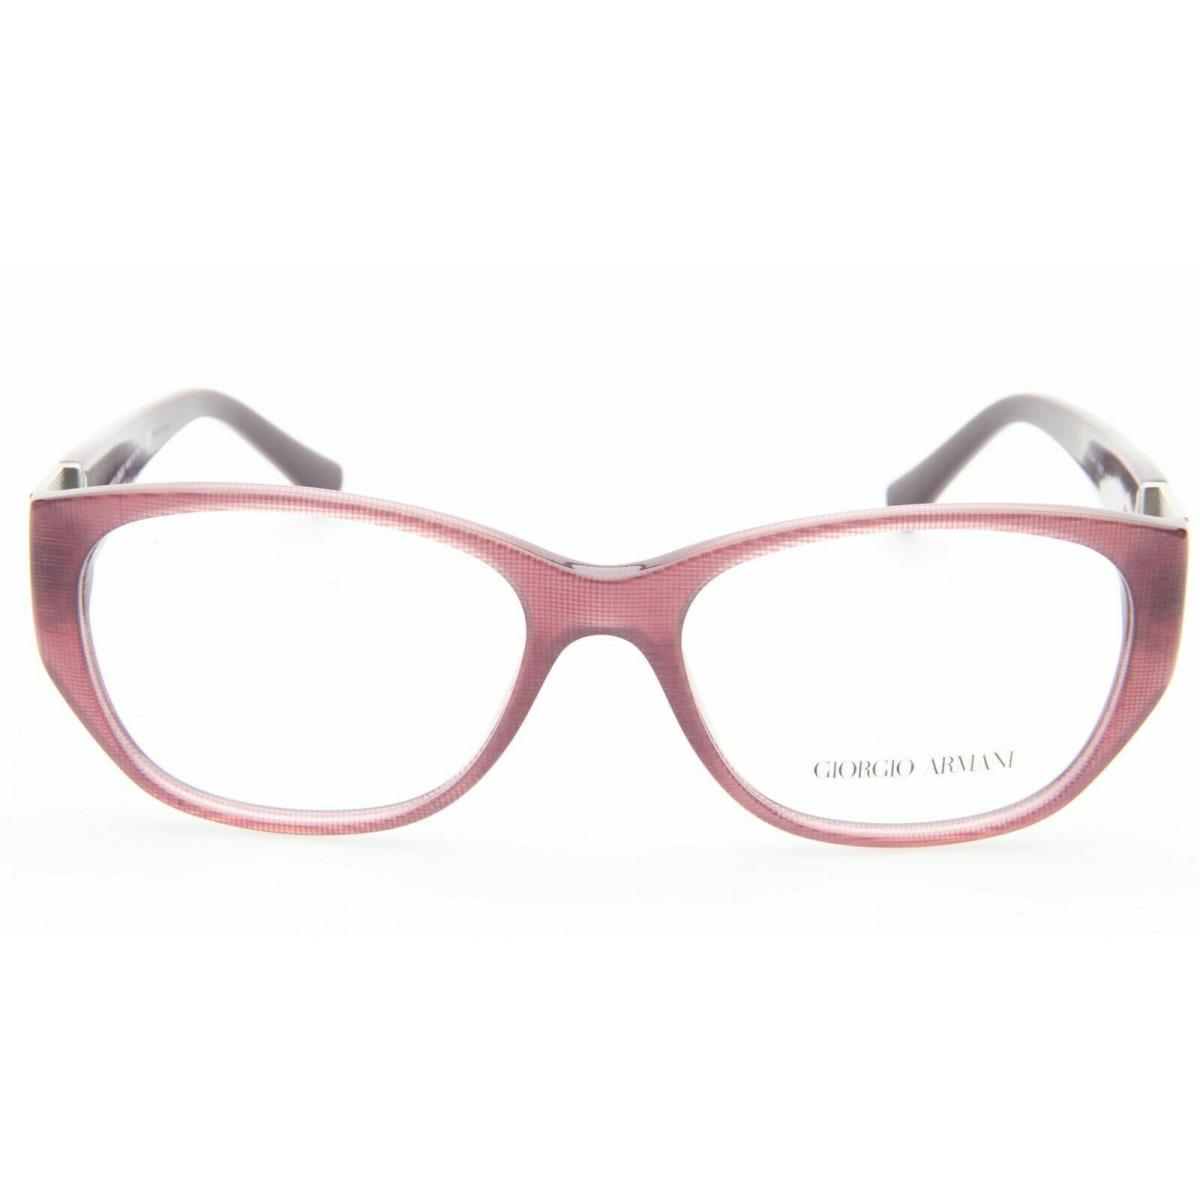 Giorgio Armani eyeglasses  - Cherry , Cherry Fabric Frame, Clear Lens 1